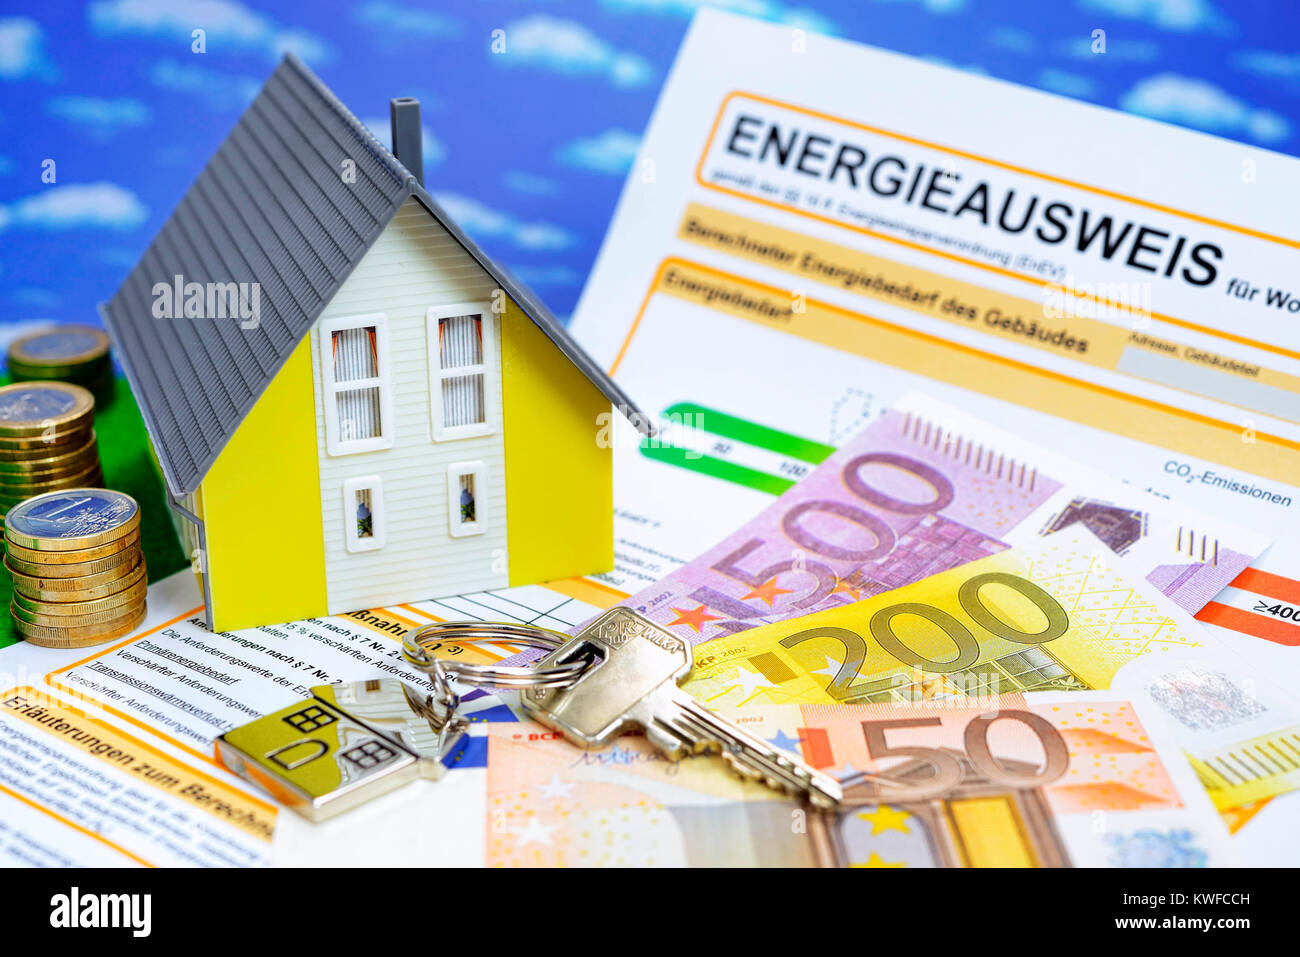 Miniature house and energy identity card, Miniaturhaus und Energieausweis Stock Photo